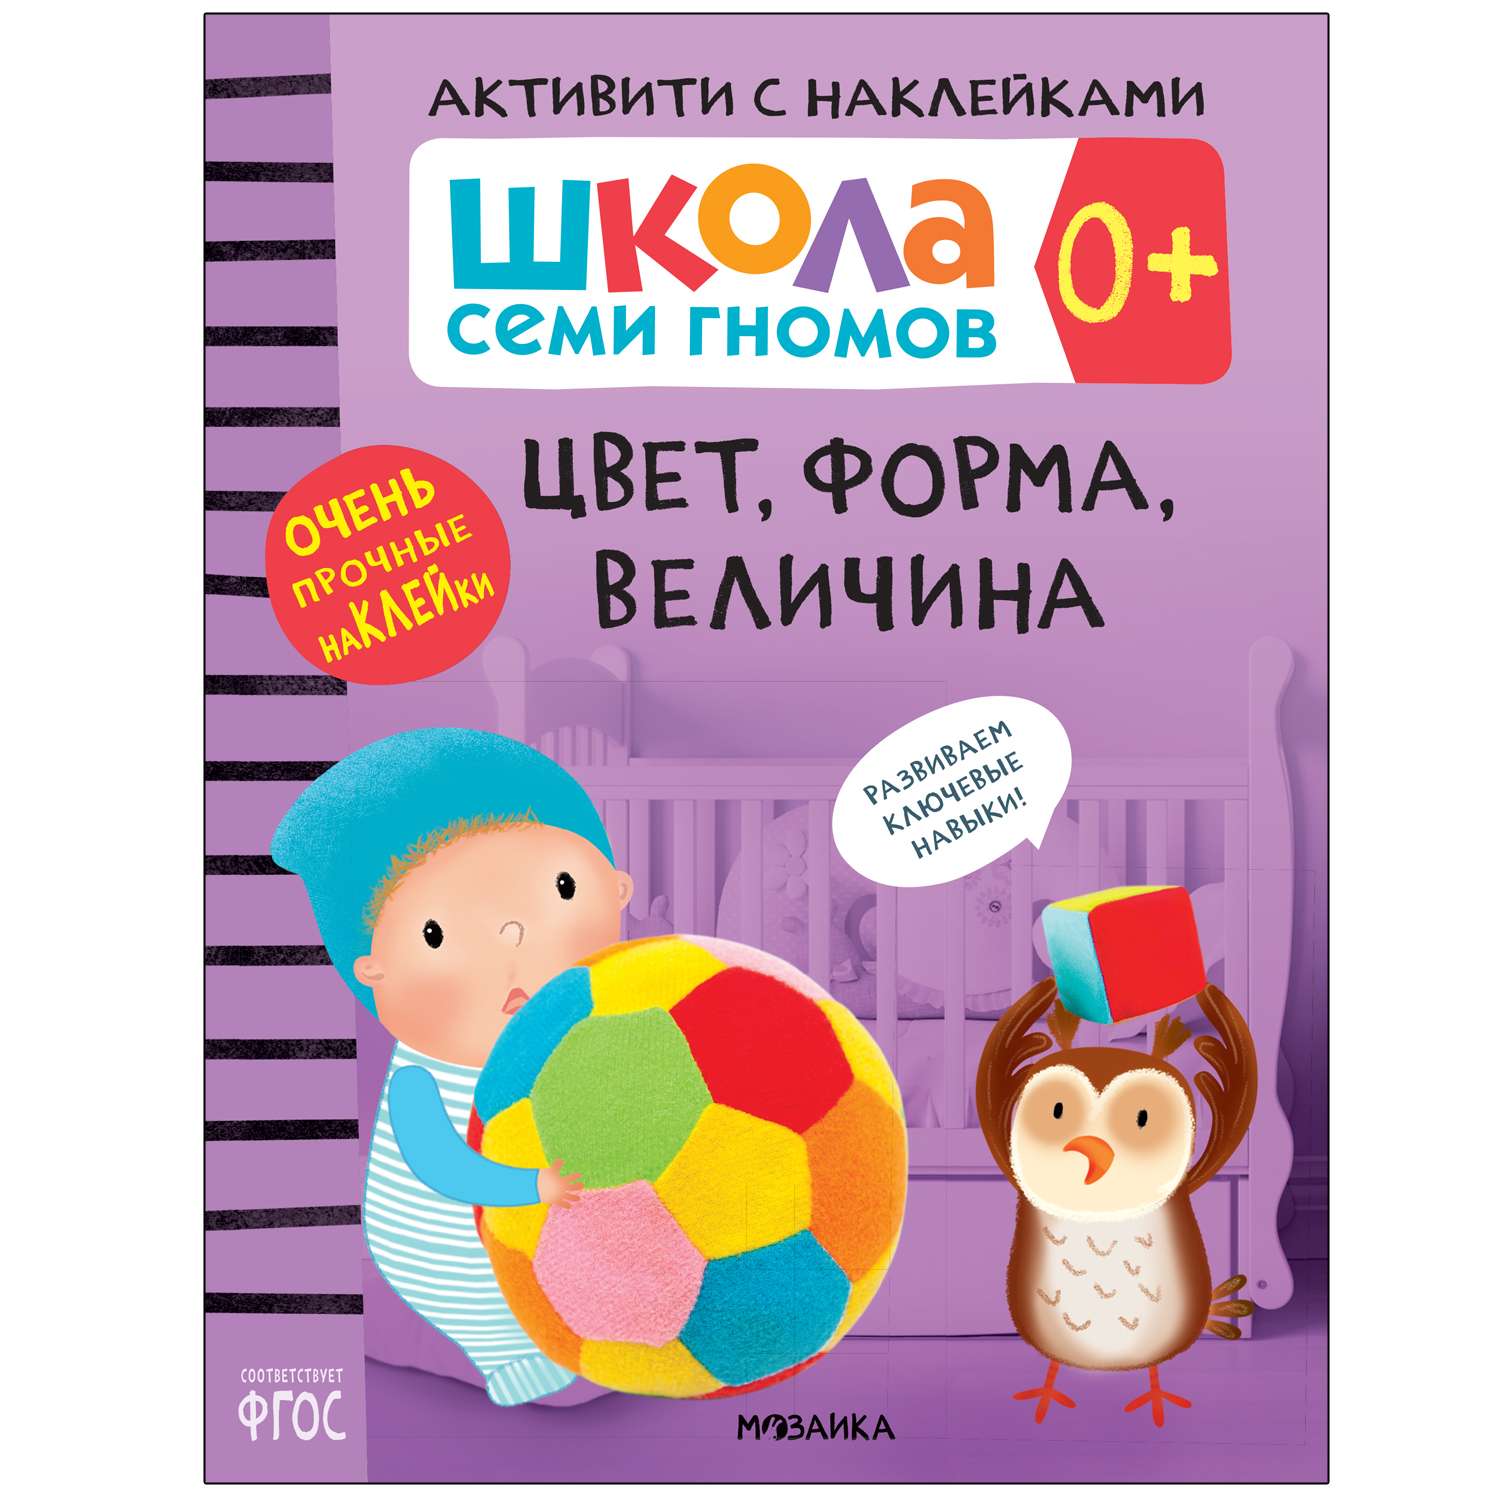 Комплект МОЗАИКА kids Школа Семи Гномов Активити с наклейками 0 - фото 5